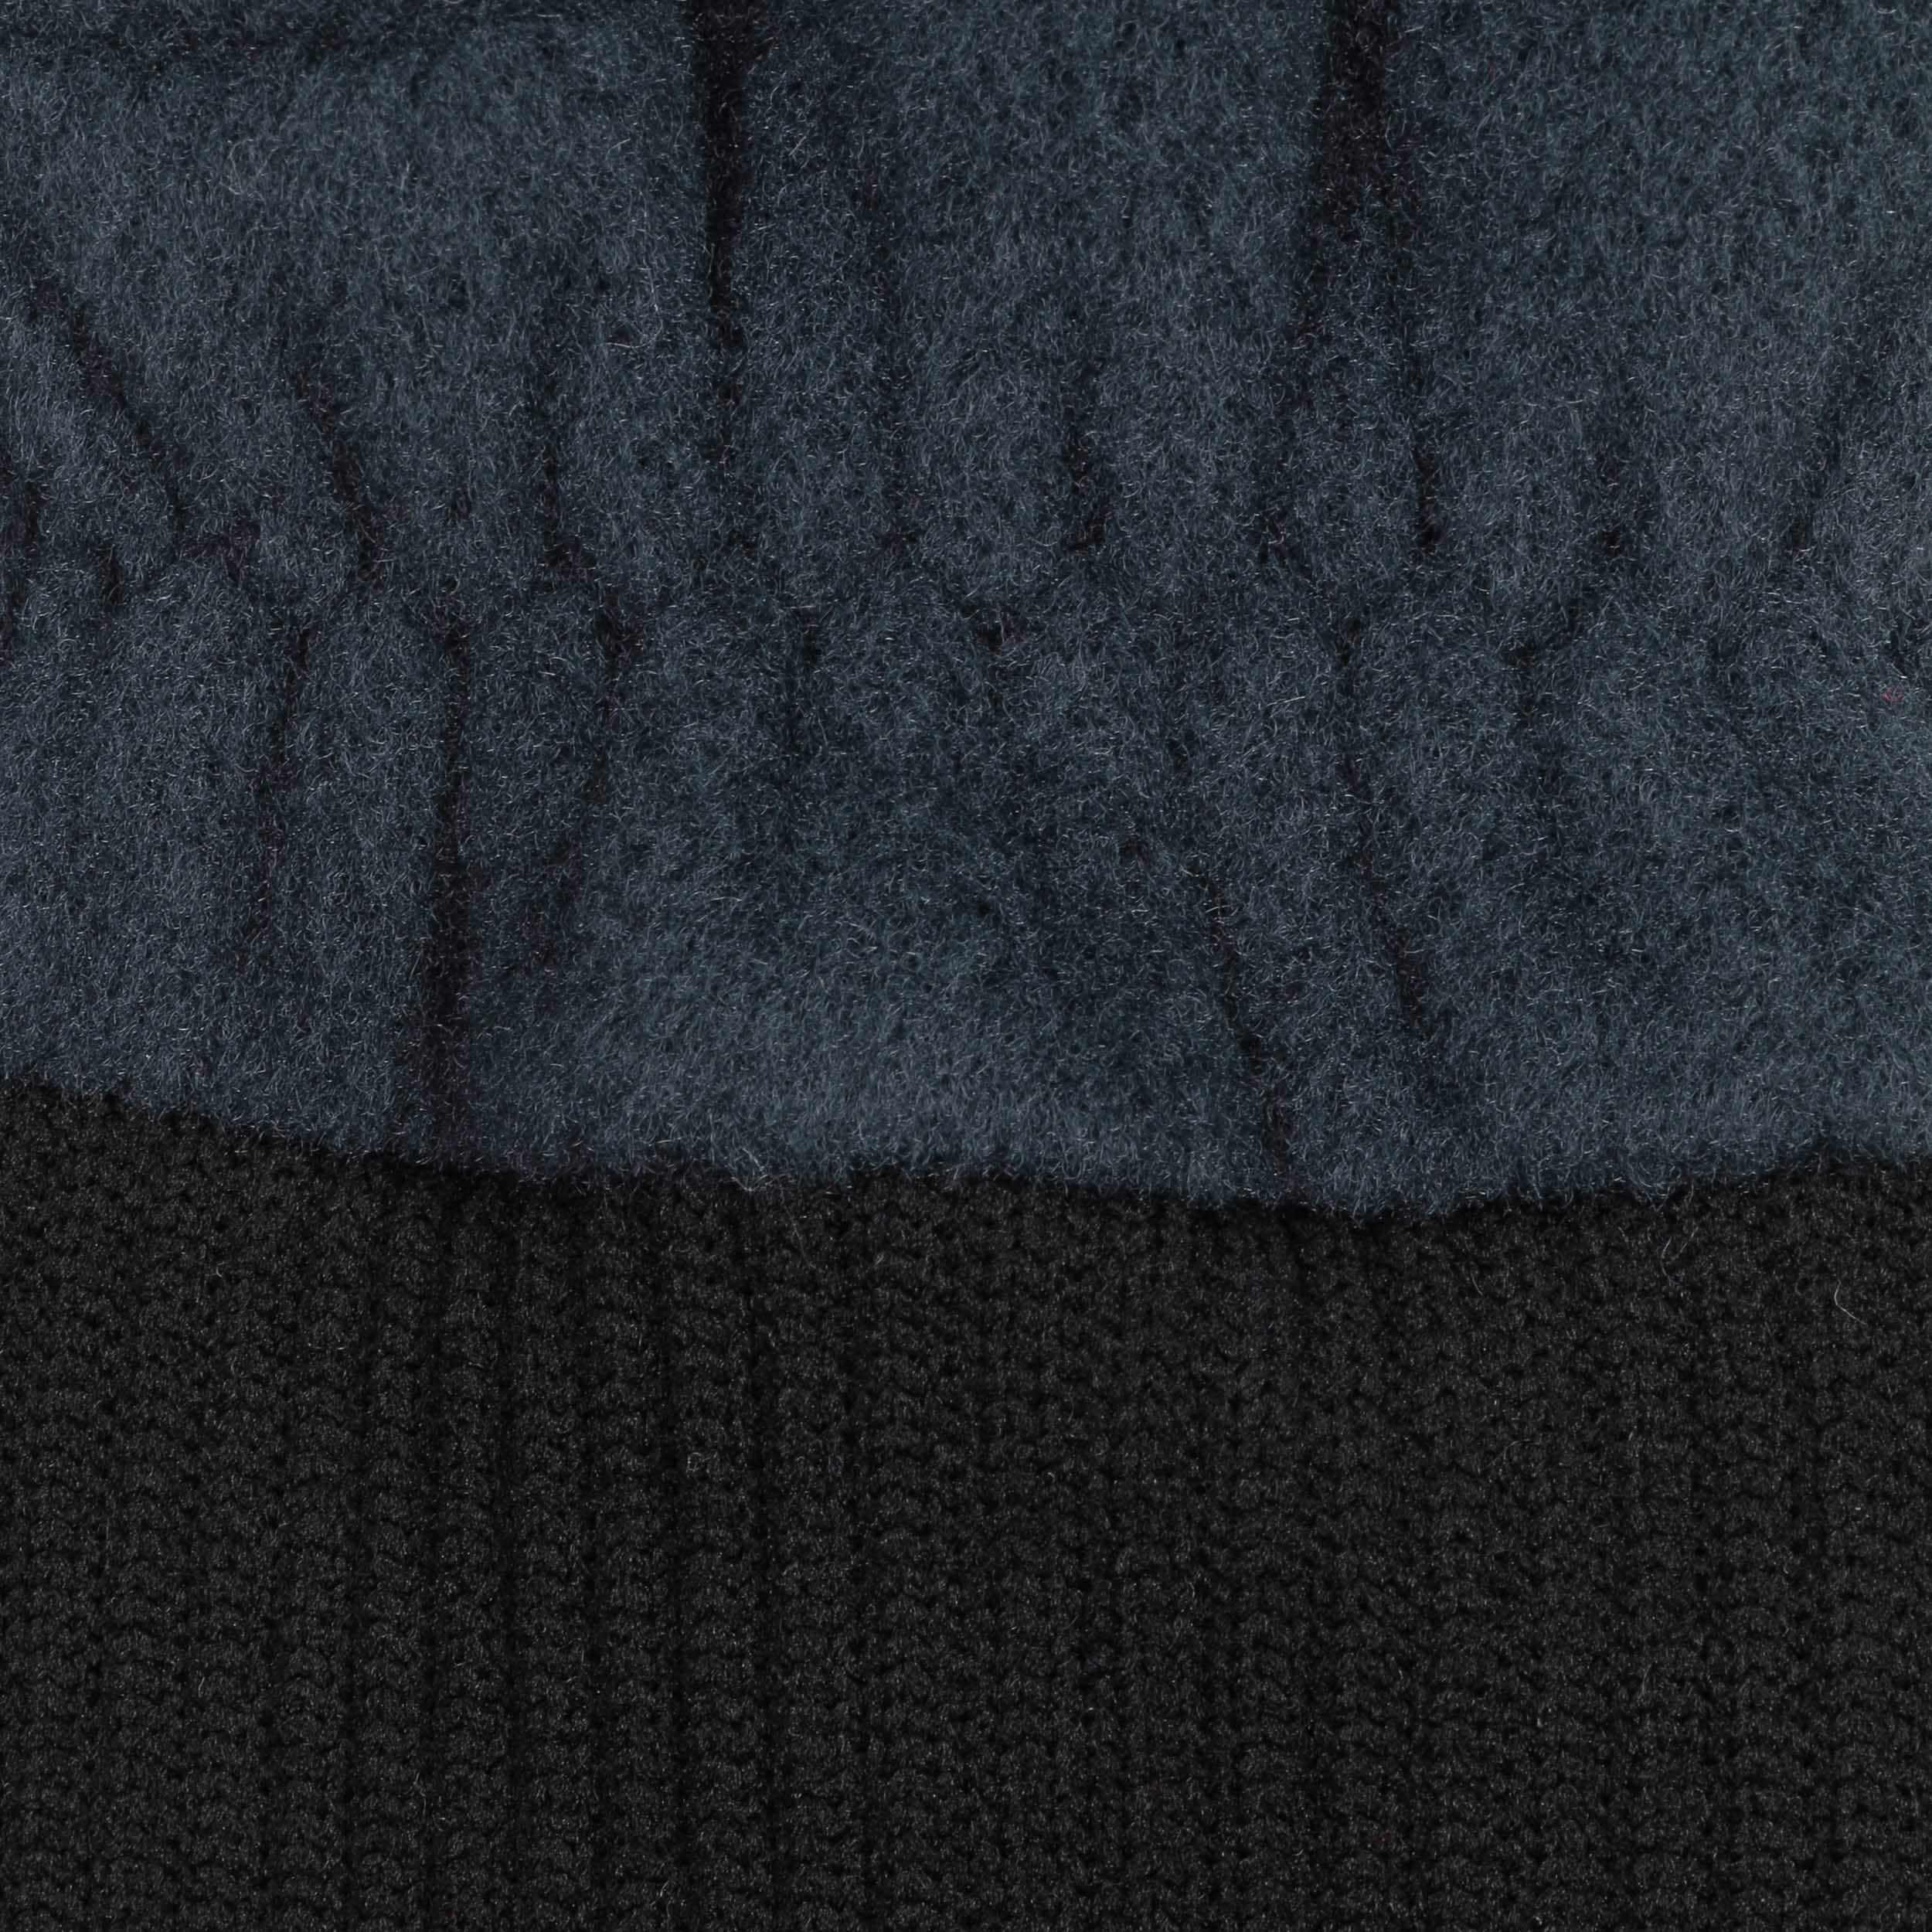 Vertigo Fleece Gloves by 37,95 € - Jack Wolfskin